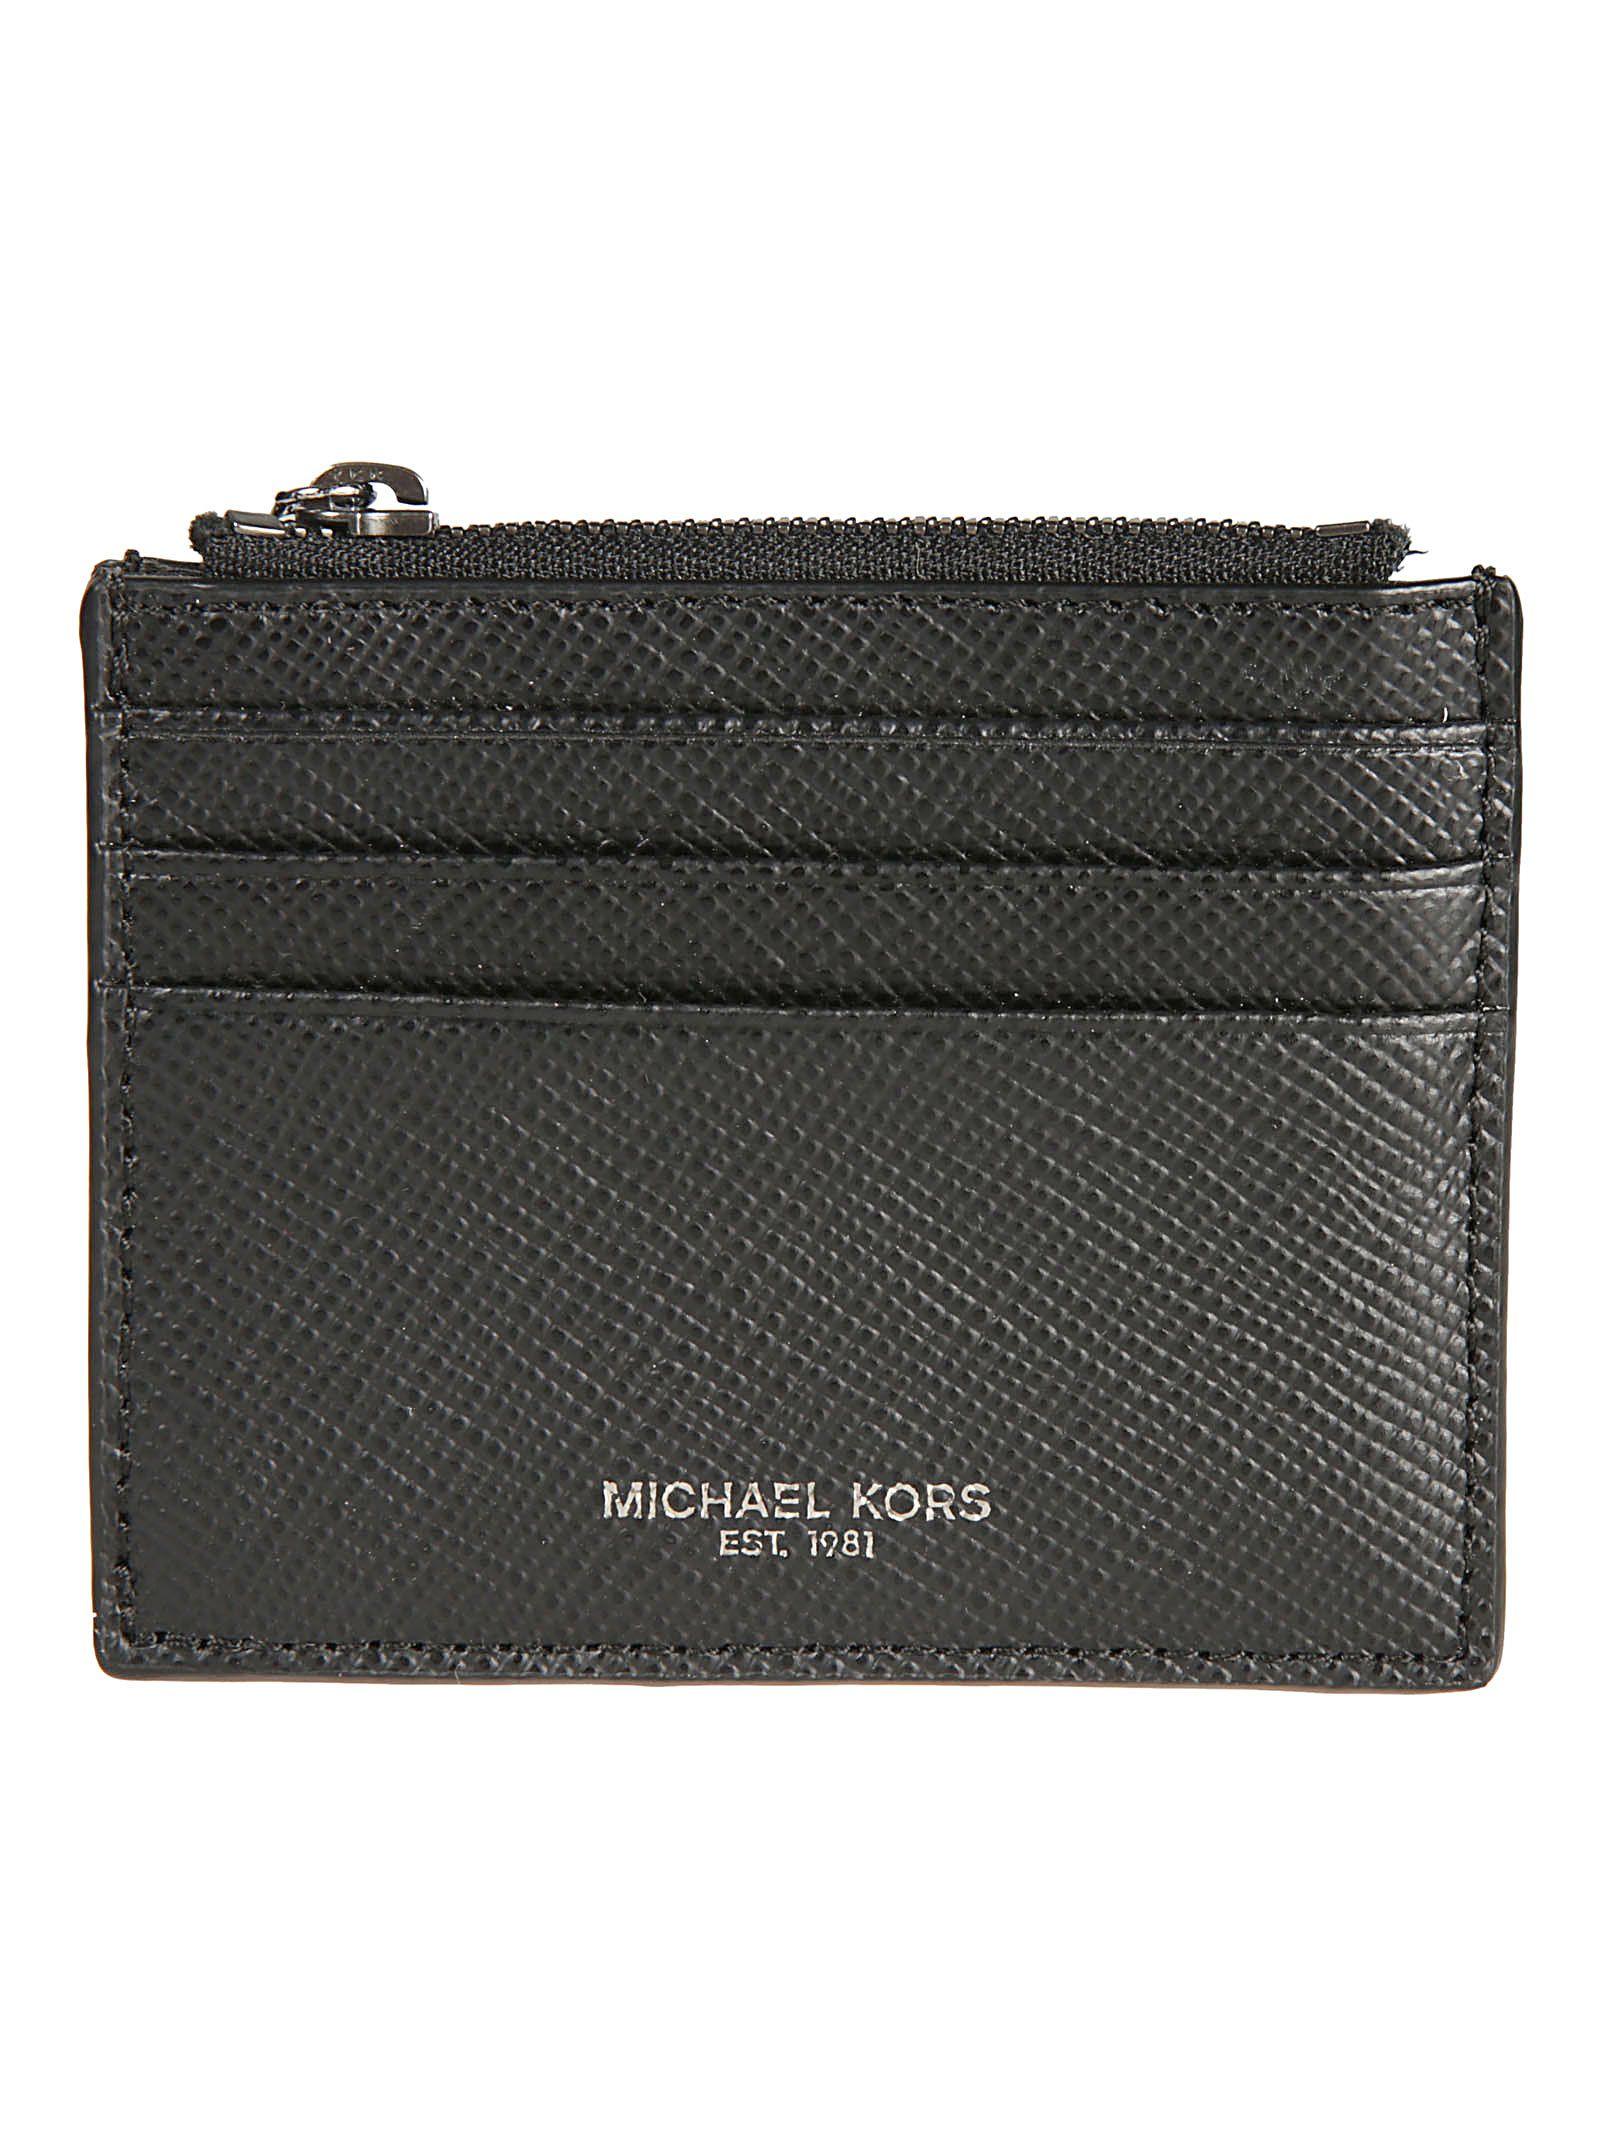 Michael Kors Black Leather Card Holder in Black for Men - Lyst